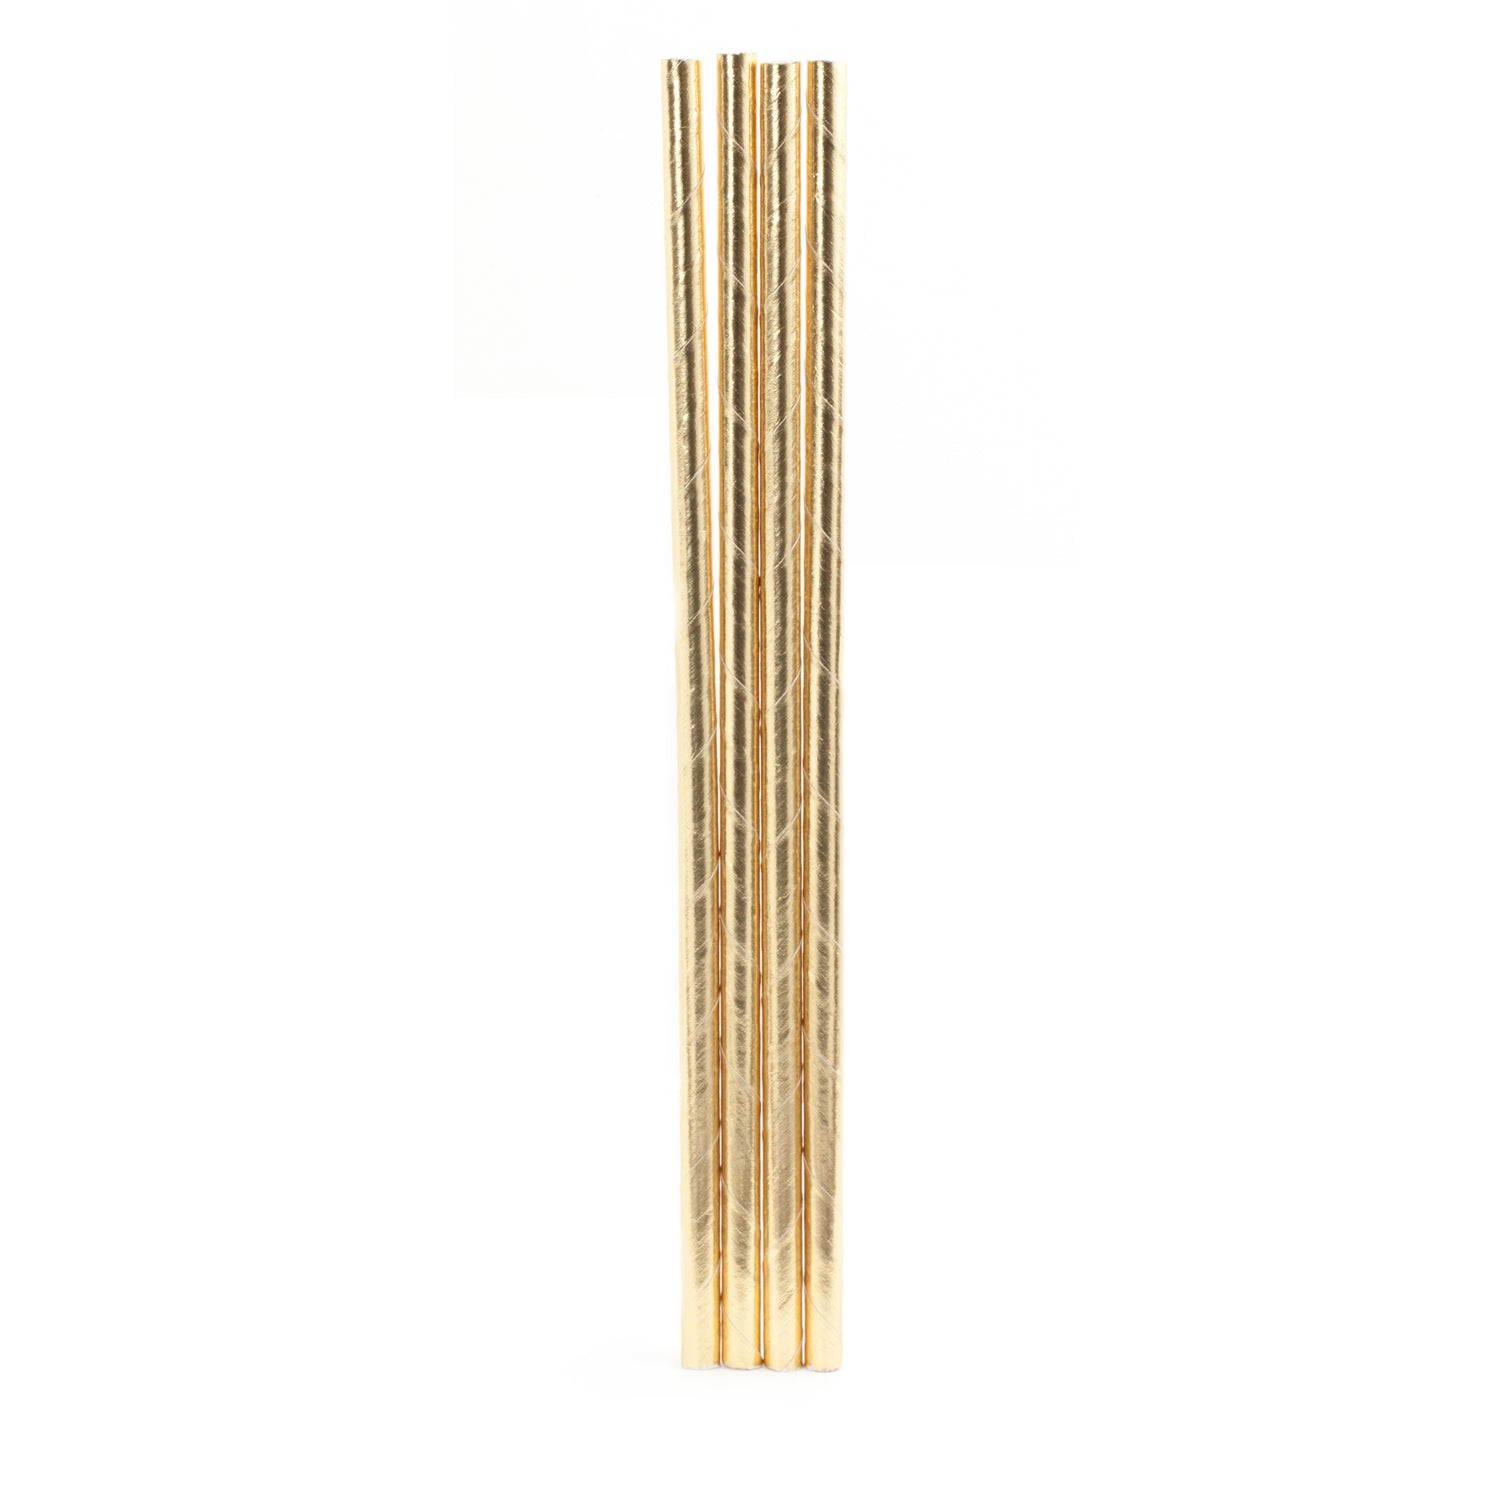 Gold Paper Straws